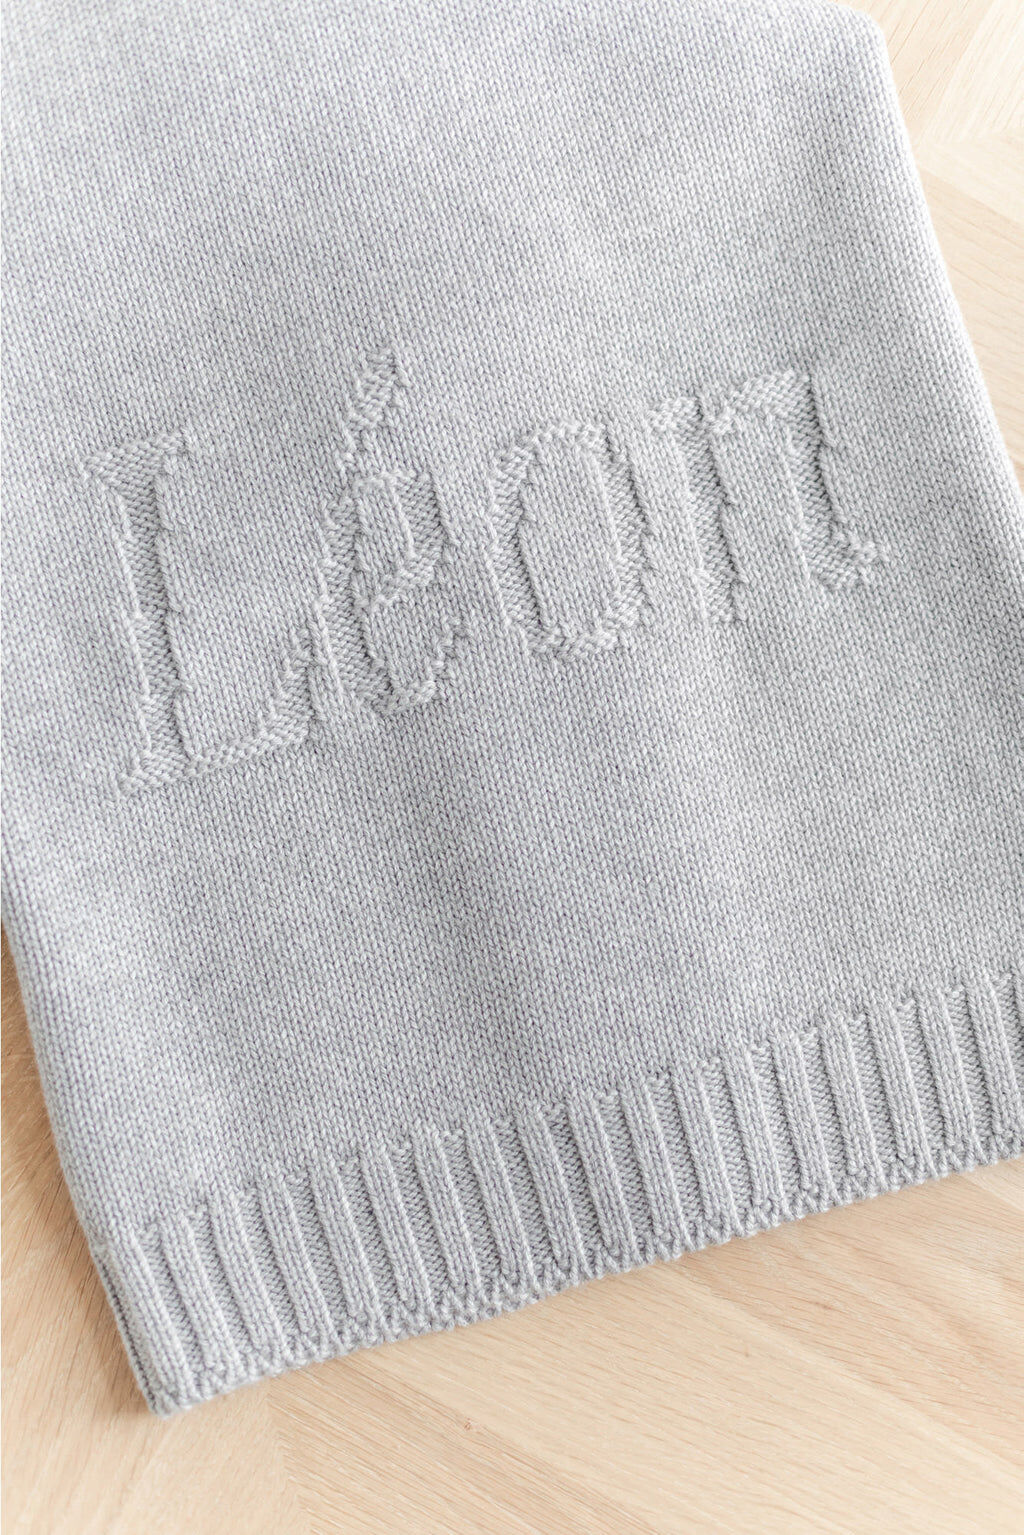 Blanket Personalized - Wool Light grey